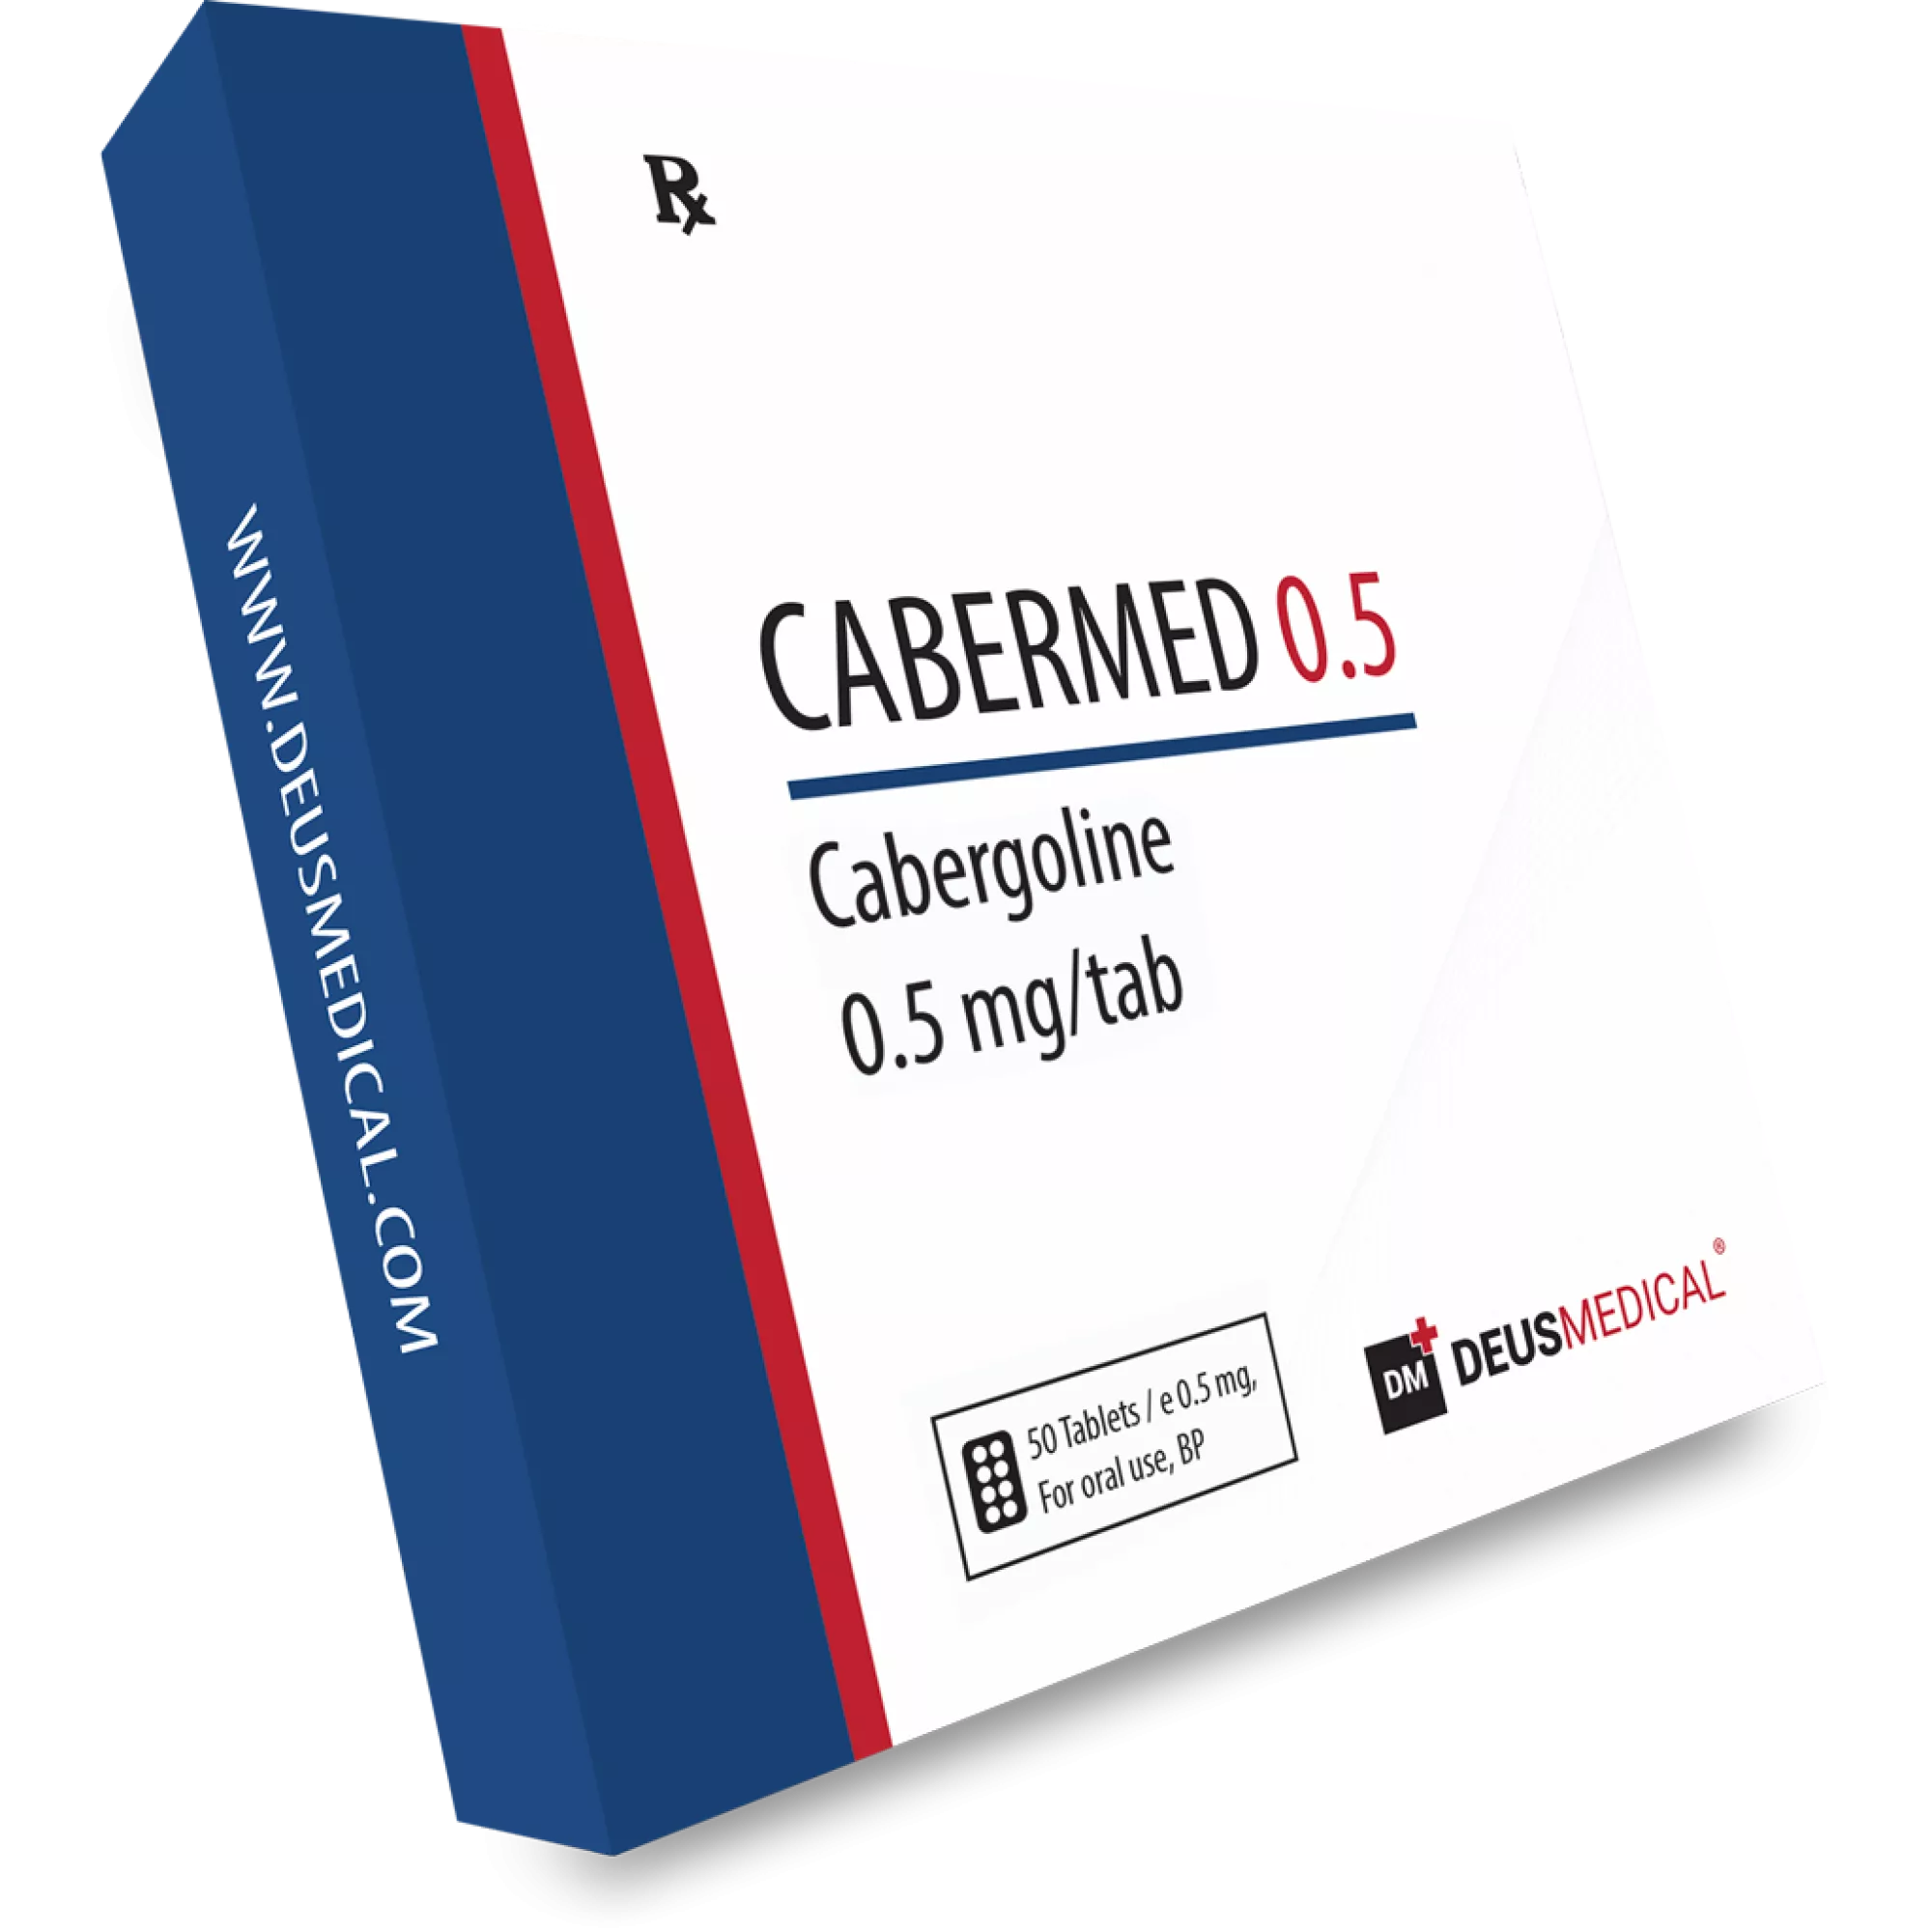 CABERMED 0.5 (Cabergoline), Deus Medical, Buy Steroids Online - www.deuspower.shop